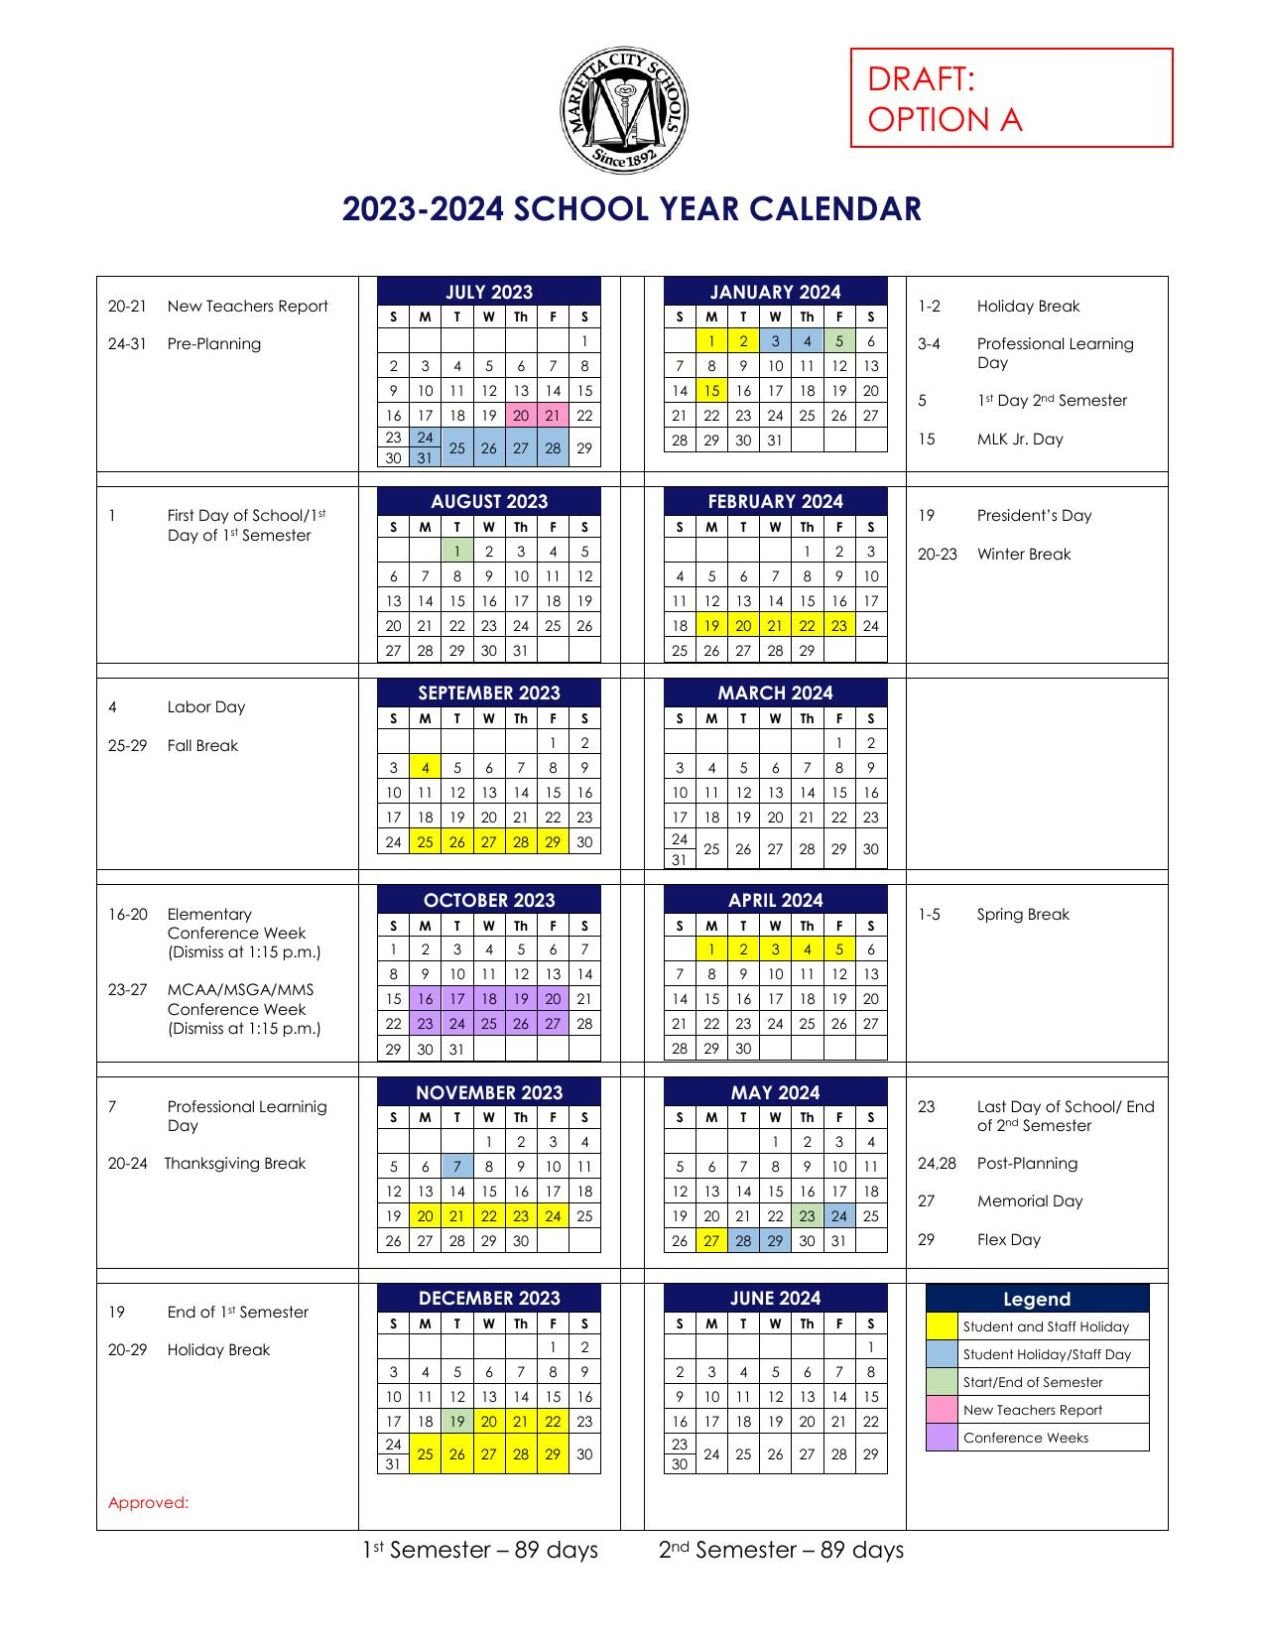 2023-2024 School Year Option A.pdf | | mdjonline.com